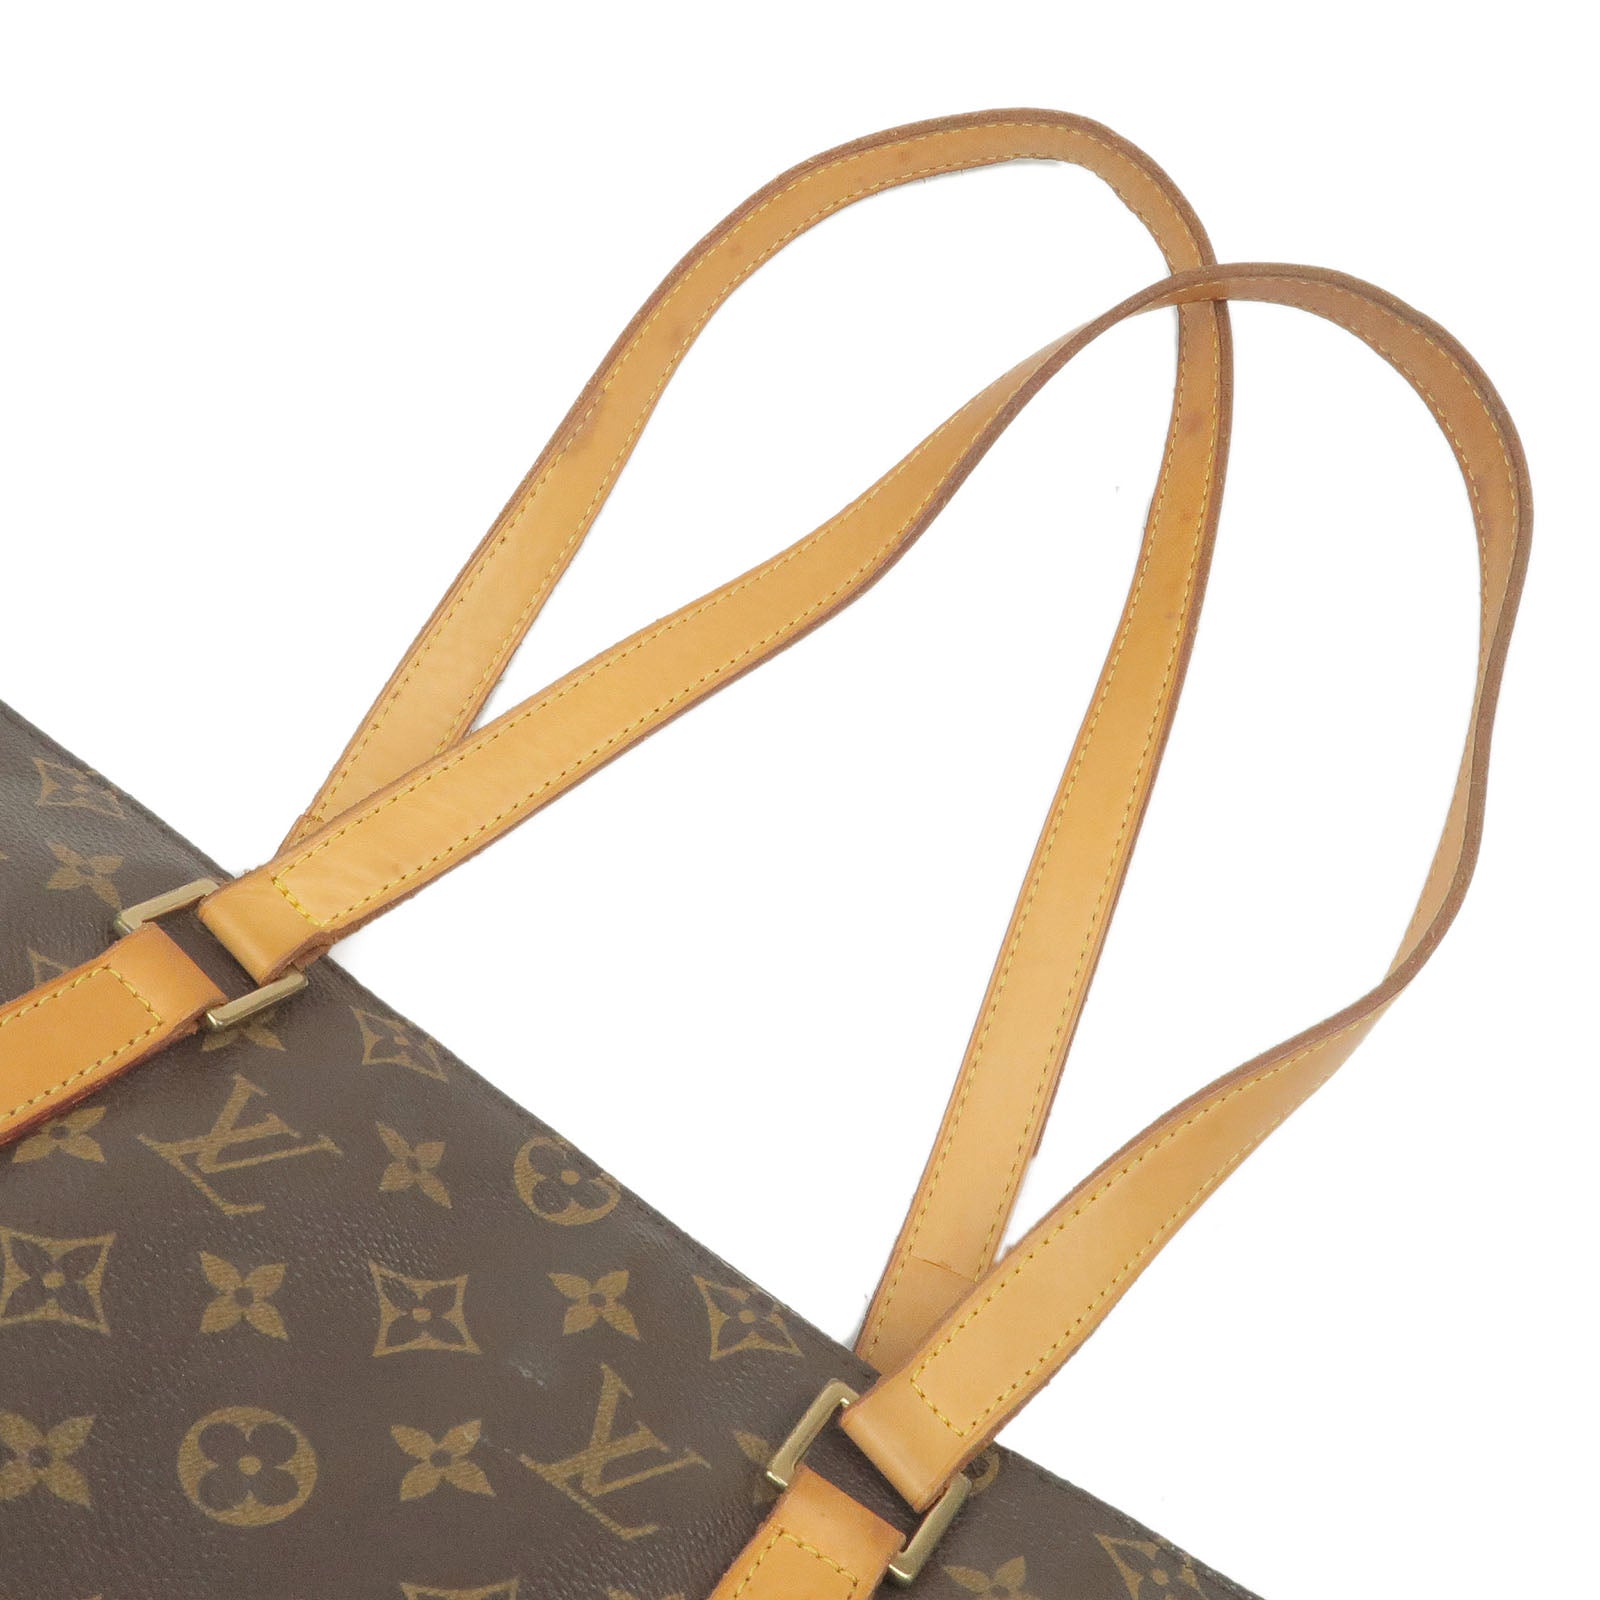 Louis Vuitton Cabas Mezzo Women's Tote Bag M51151 Monogram Brown